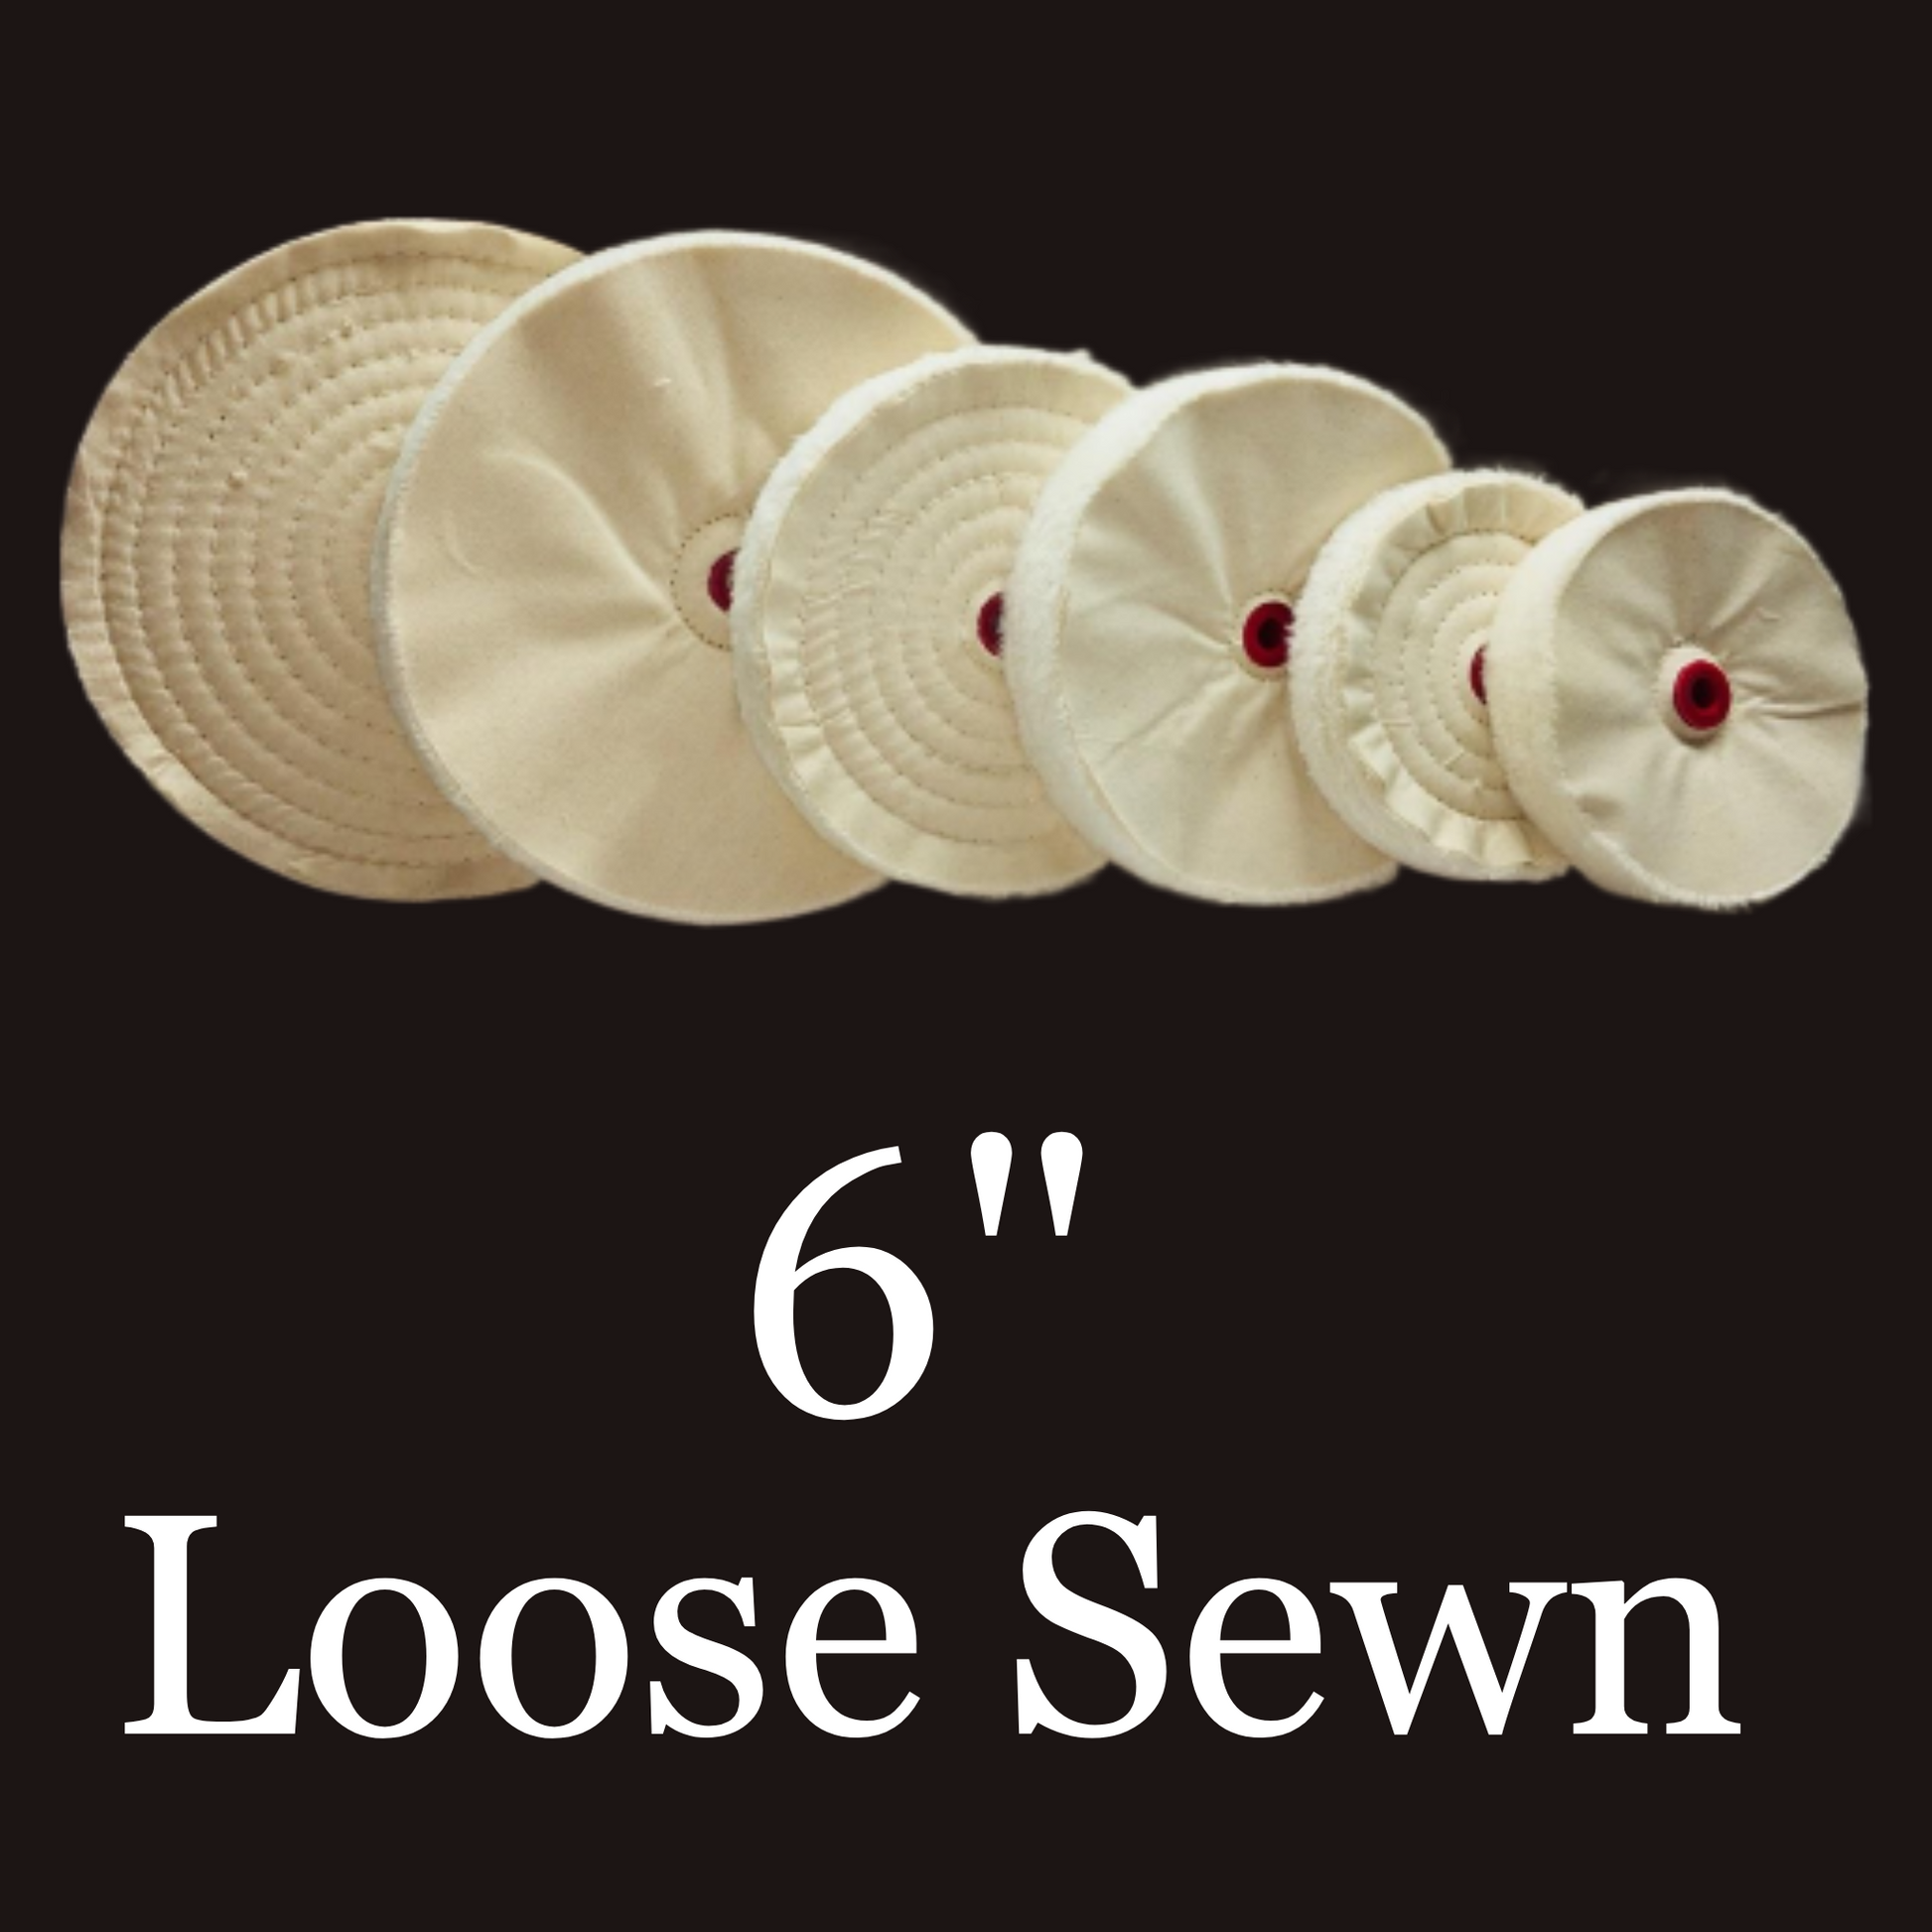 Loose Sewn Cotton Buffing 6” Wheels